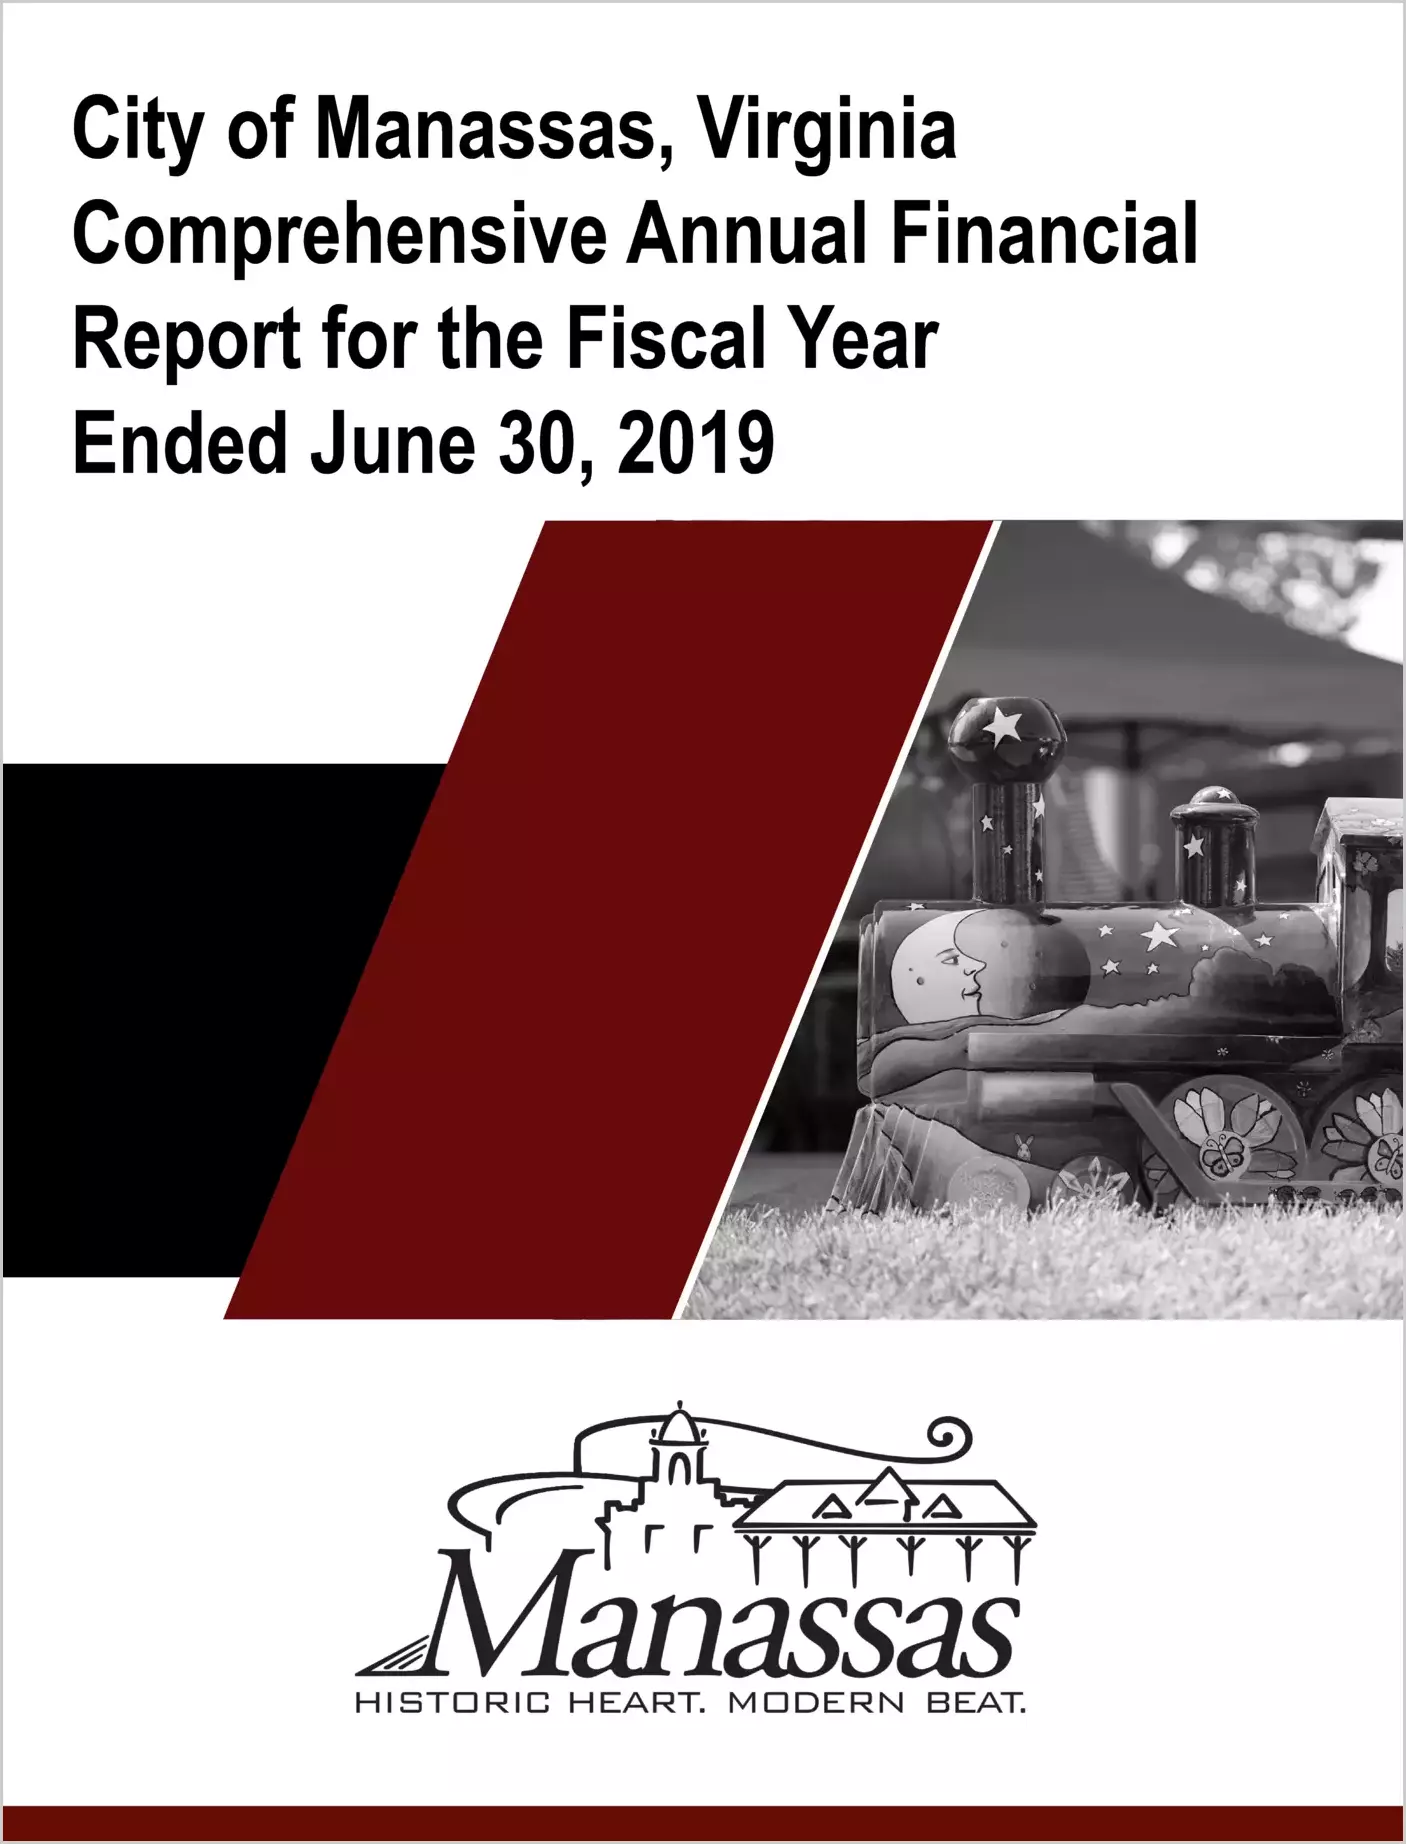 2019 Annual Financial Report for City of Manassas